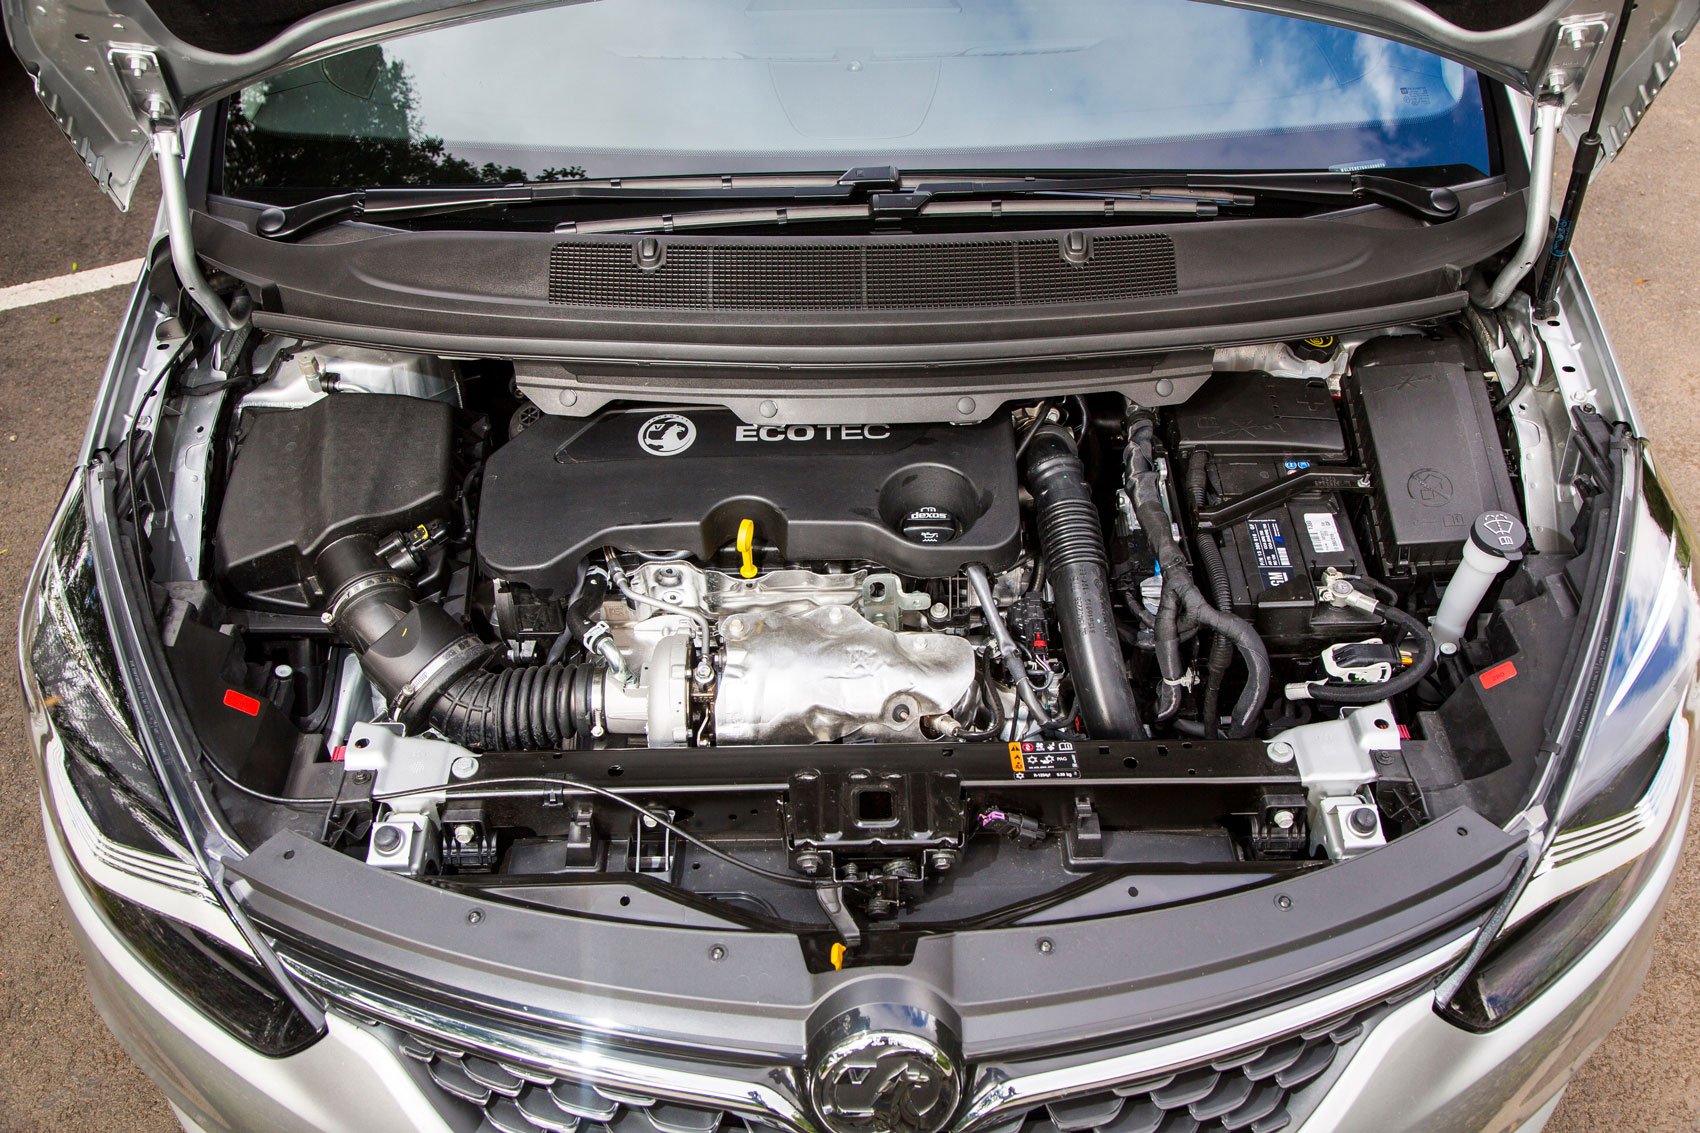 2.0-litre Vauxhall Zafira Tourer diesel engine